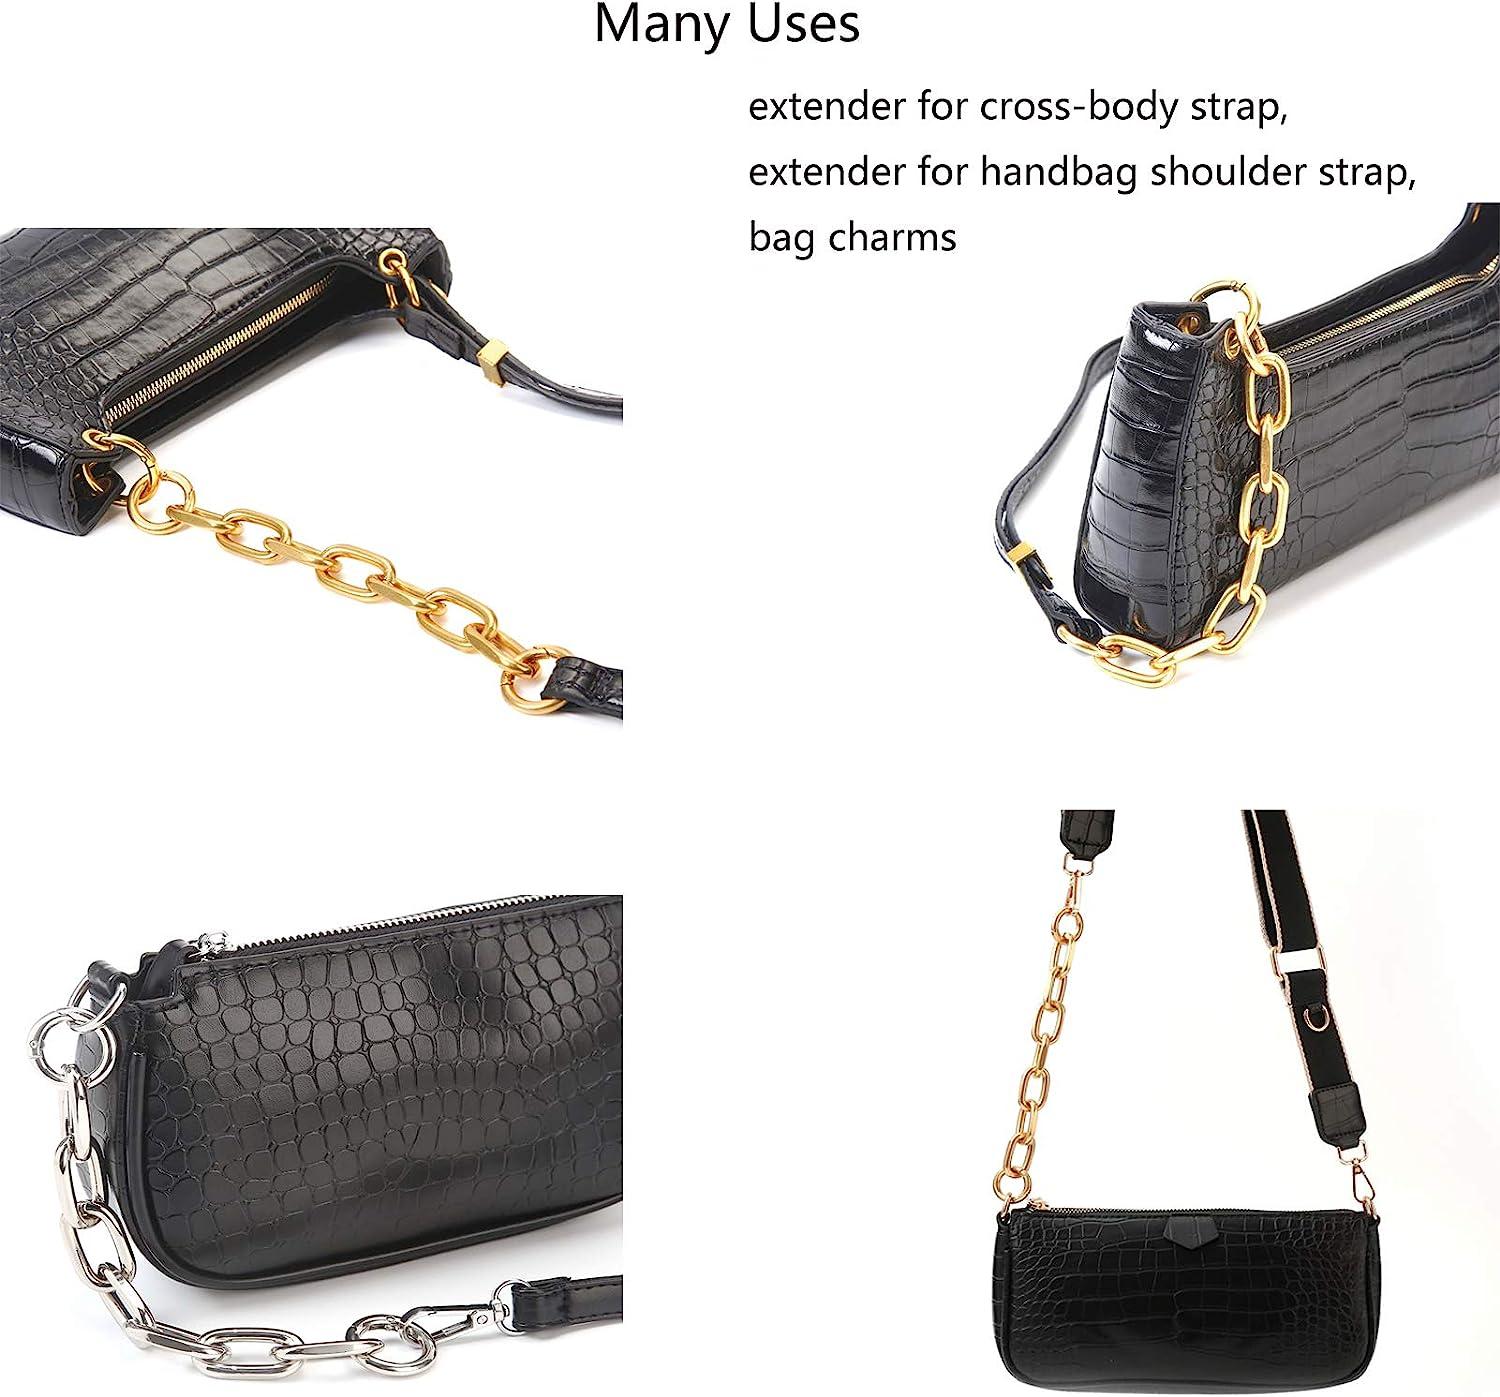 Yichain Fashion Large Metal Cross-body Purse Strap Extender,Handbag  Shoulder Strap Extender,Bag Chain Accessory Charms (Gold)